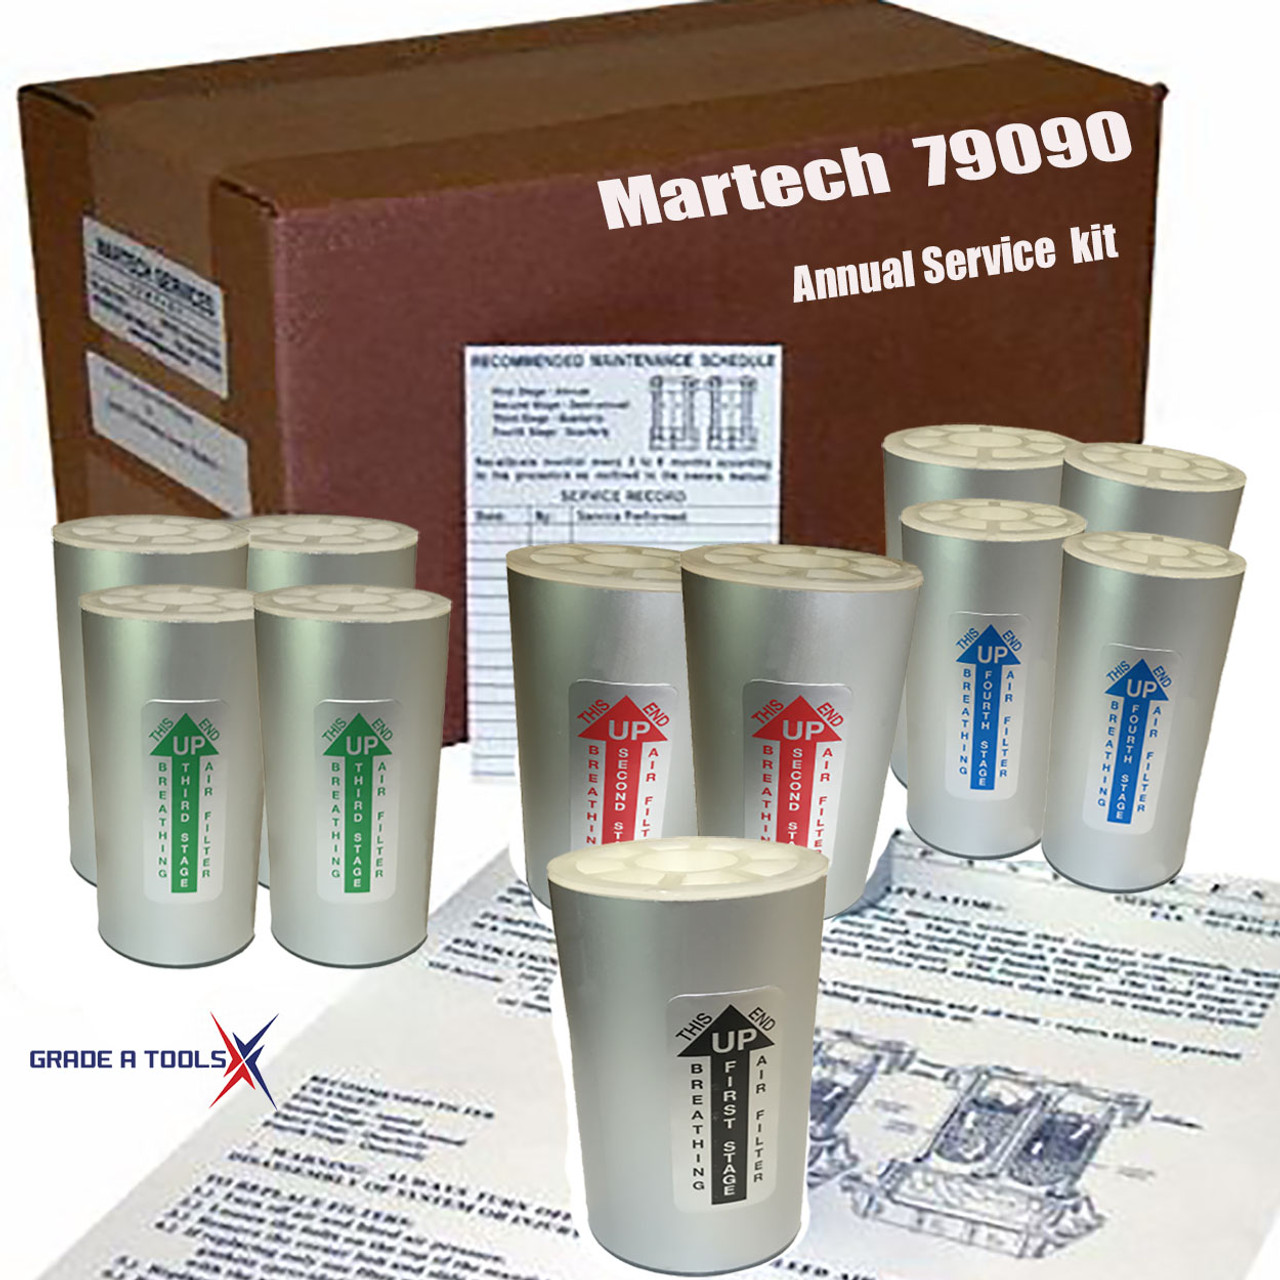 Martech 79090 The Solution - Service Kit